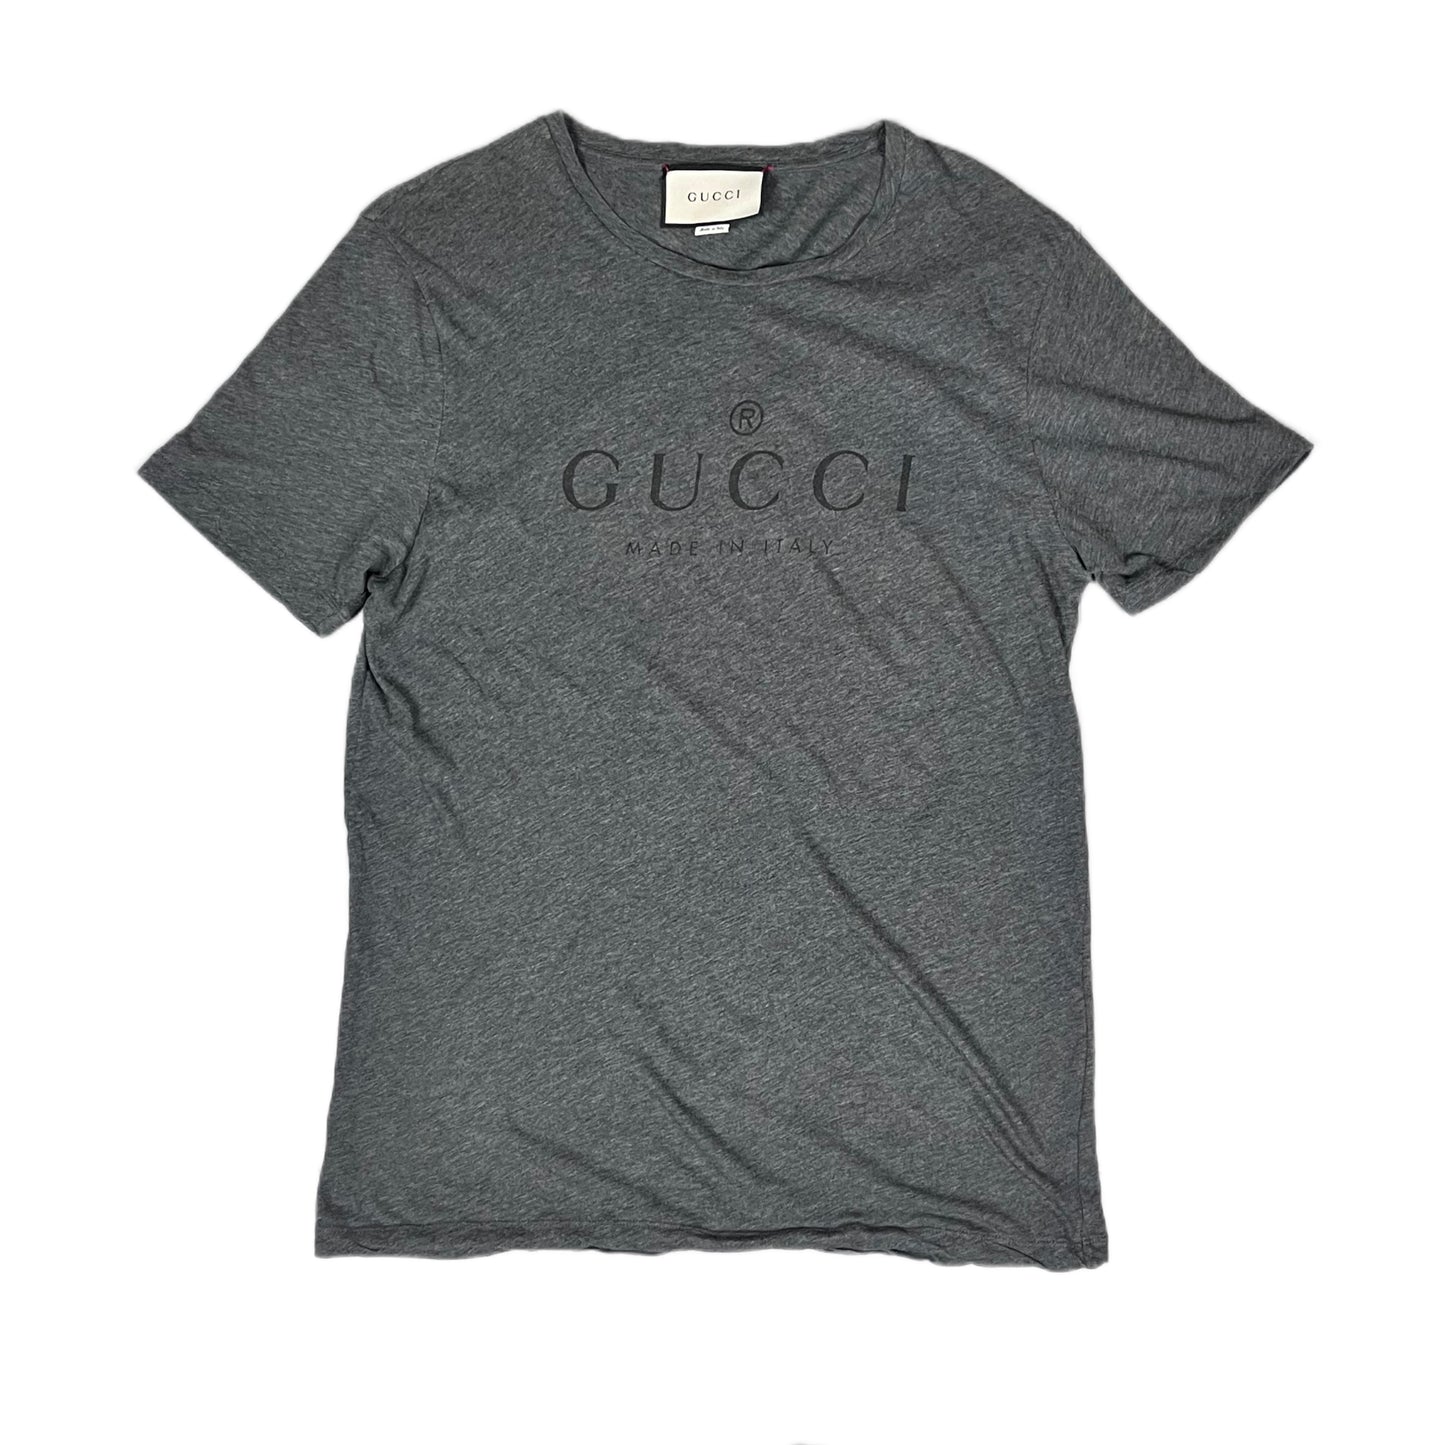 Gucci Spellout Logo T-Shirt